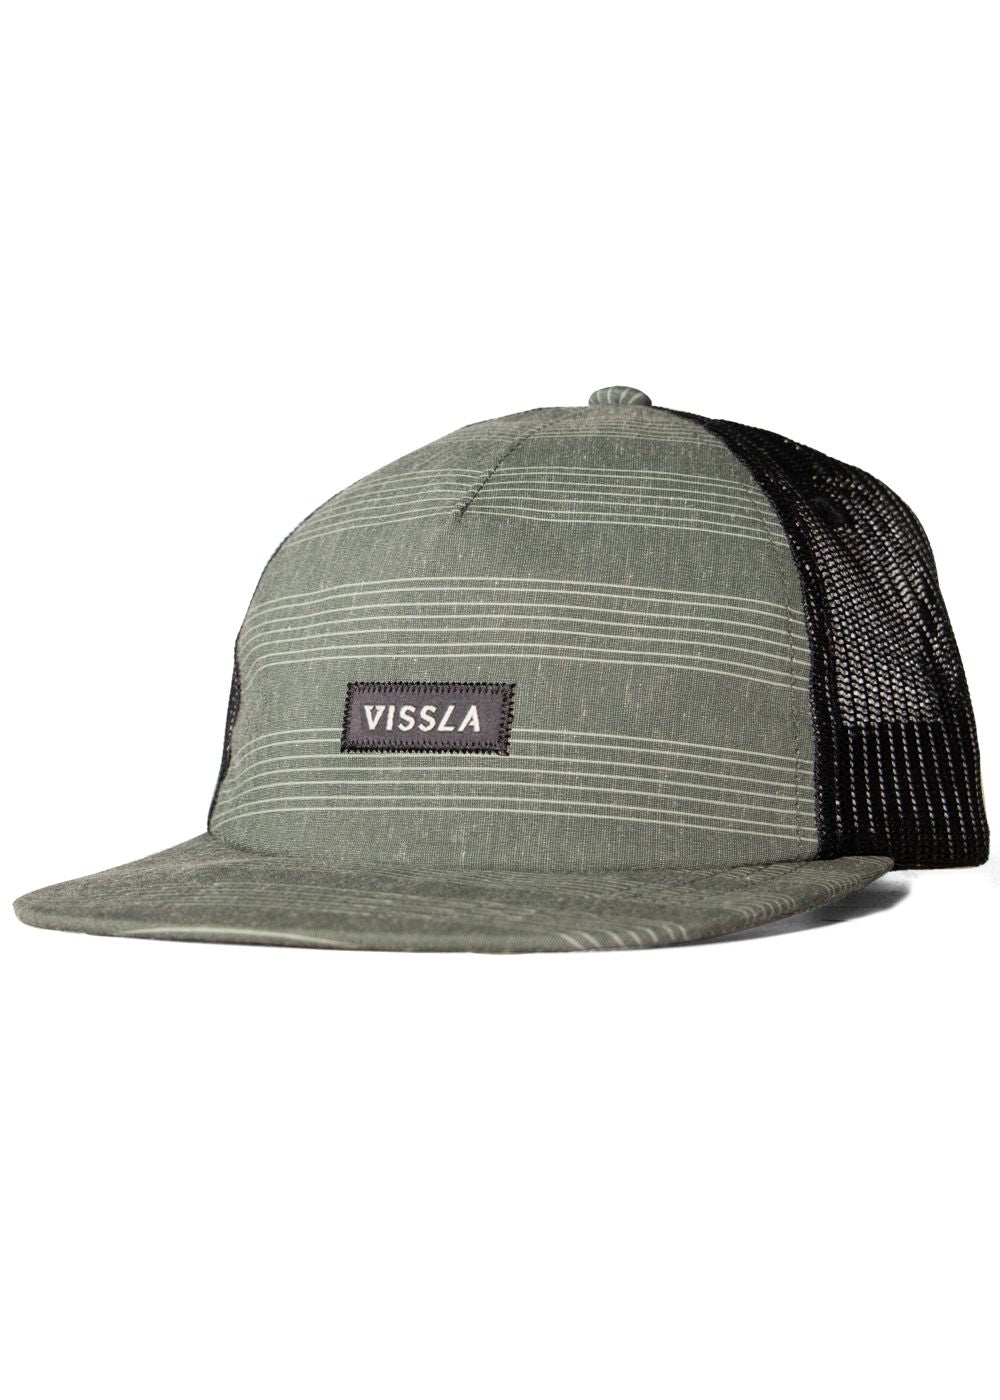 Vissla Lay Day Eco Trucker II Hat- Vintage green